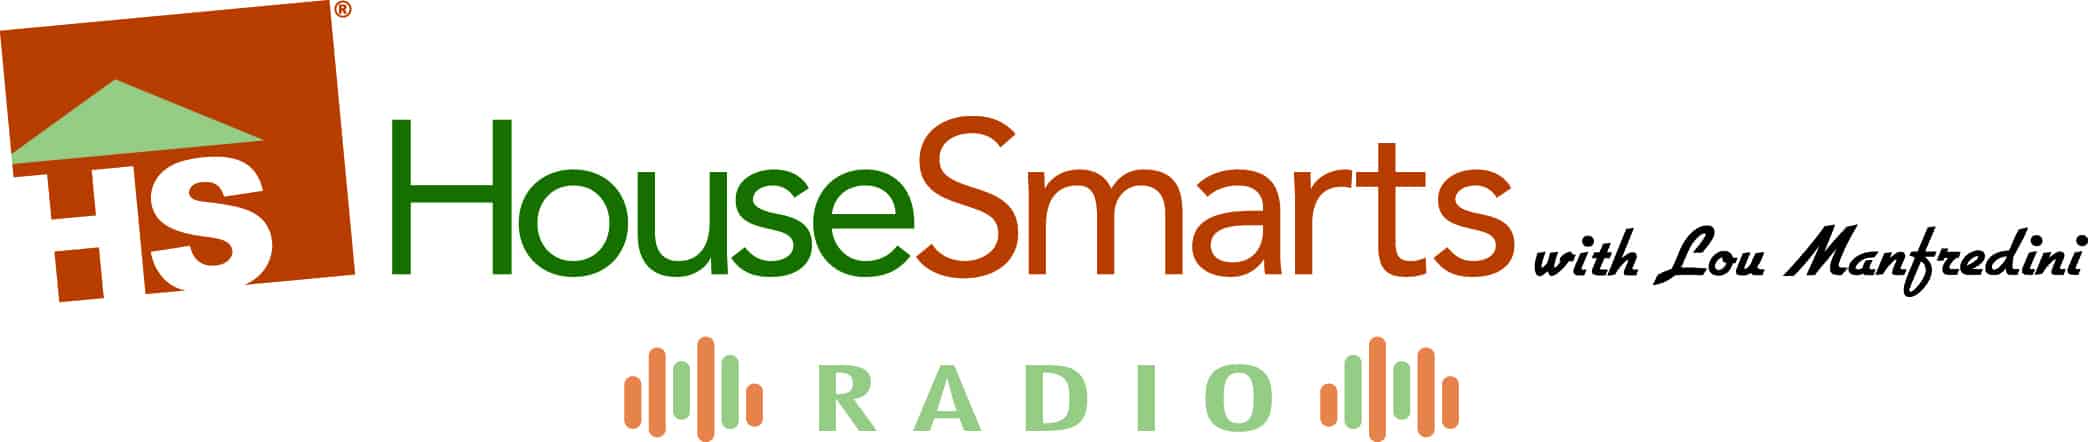 HouseSmarts radio logo with Lou Manfredini